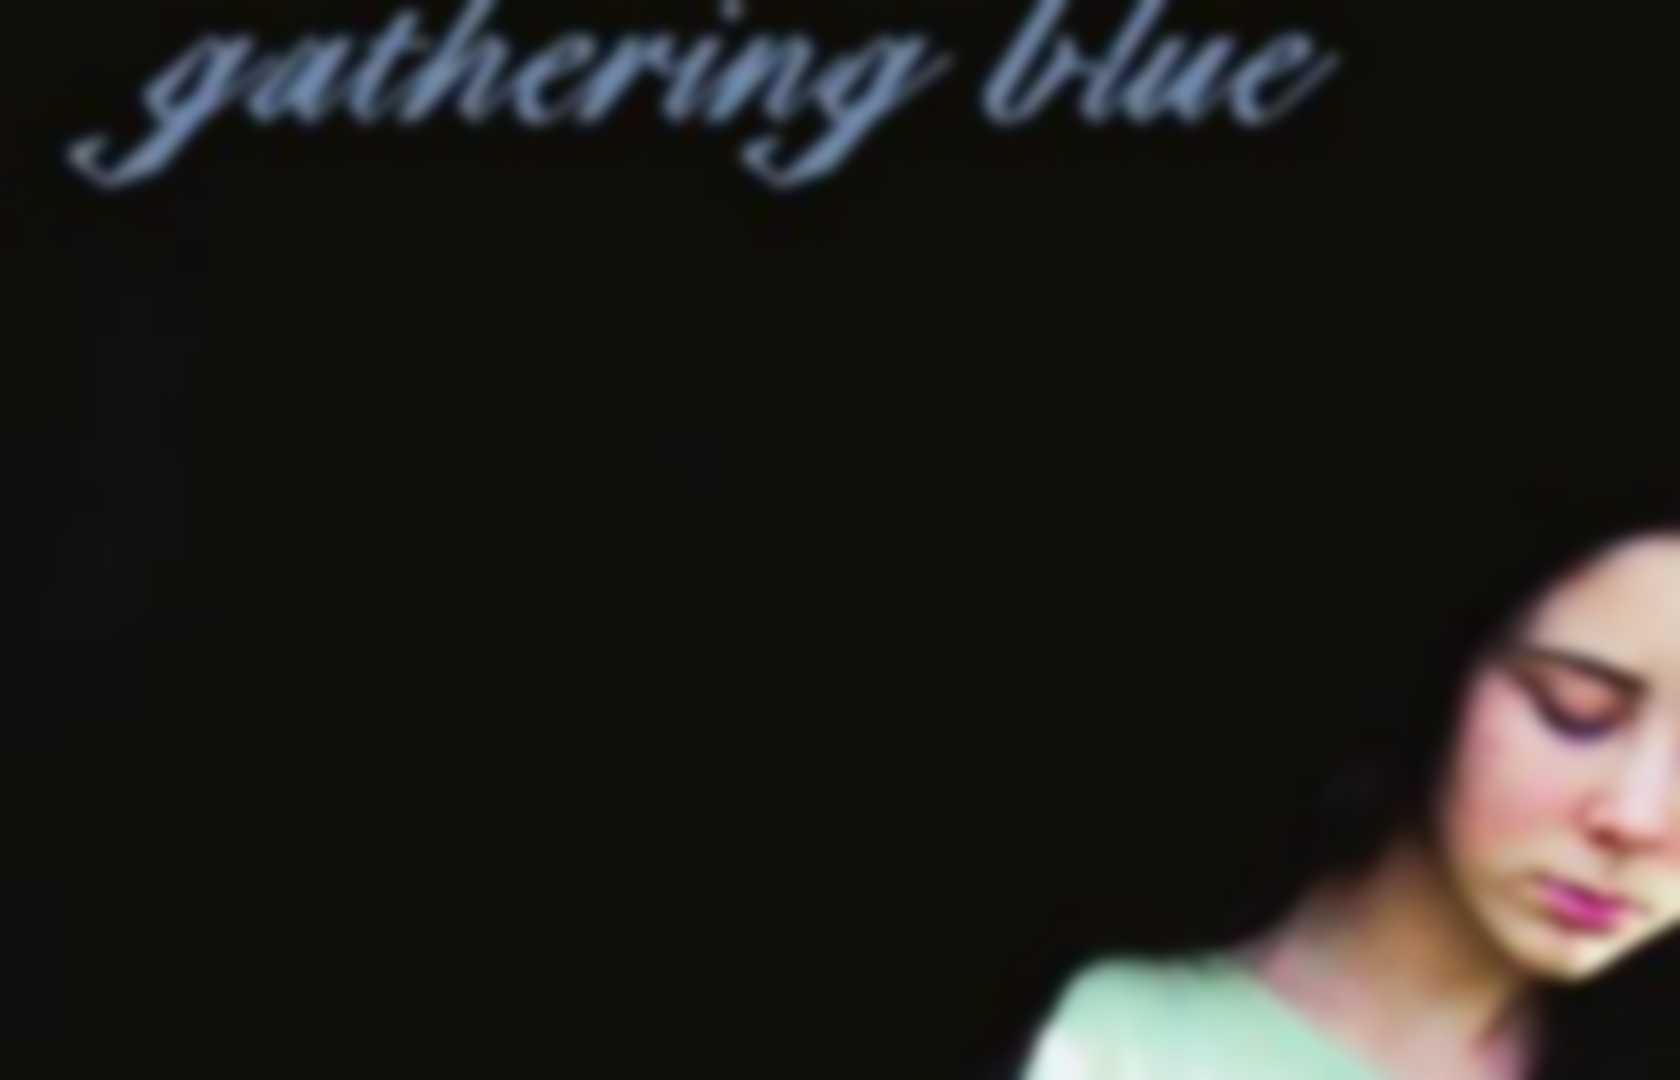 gathering blue